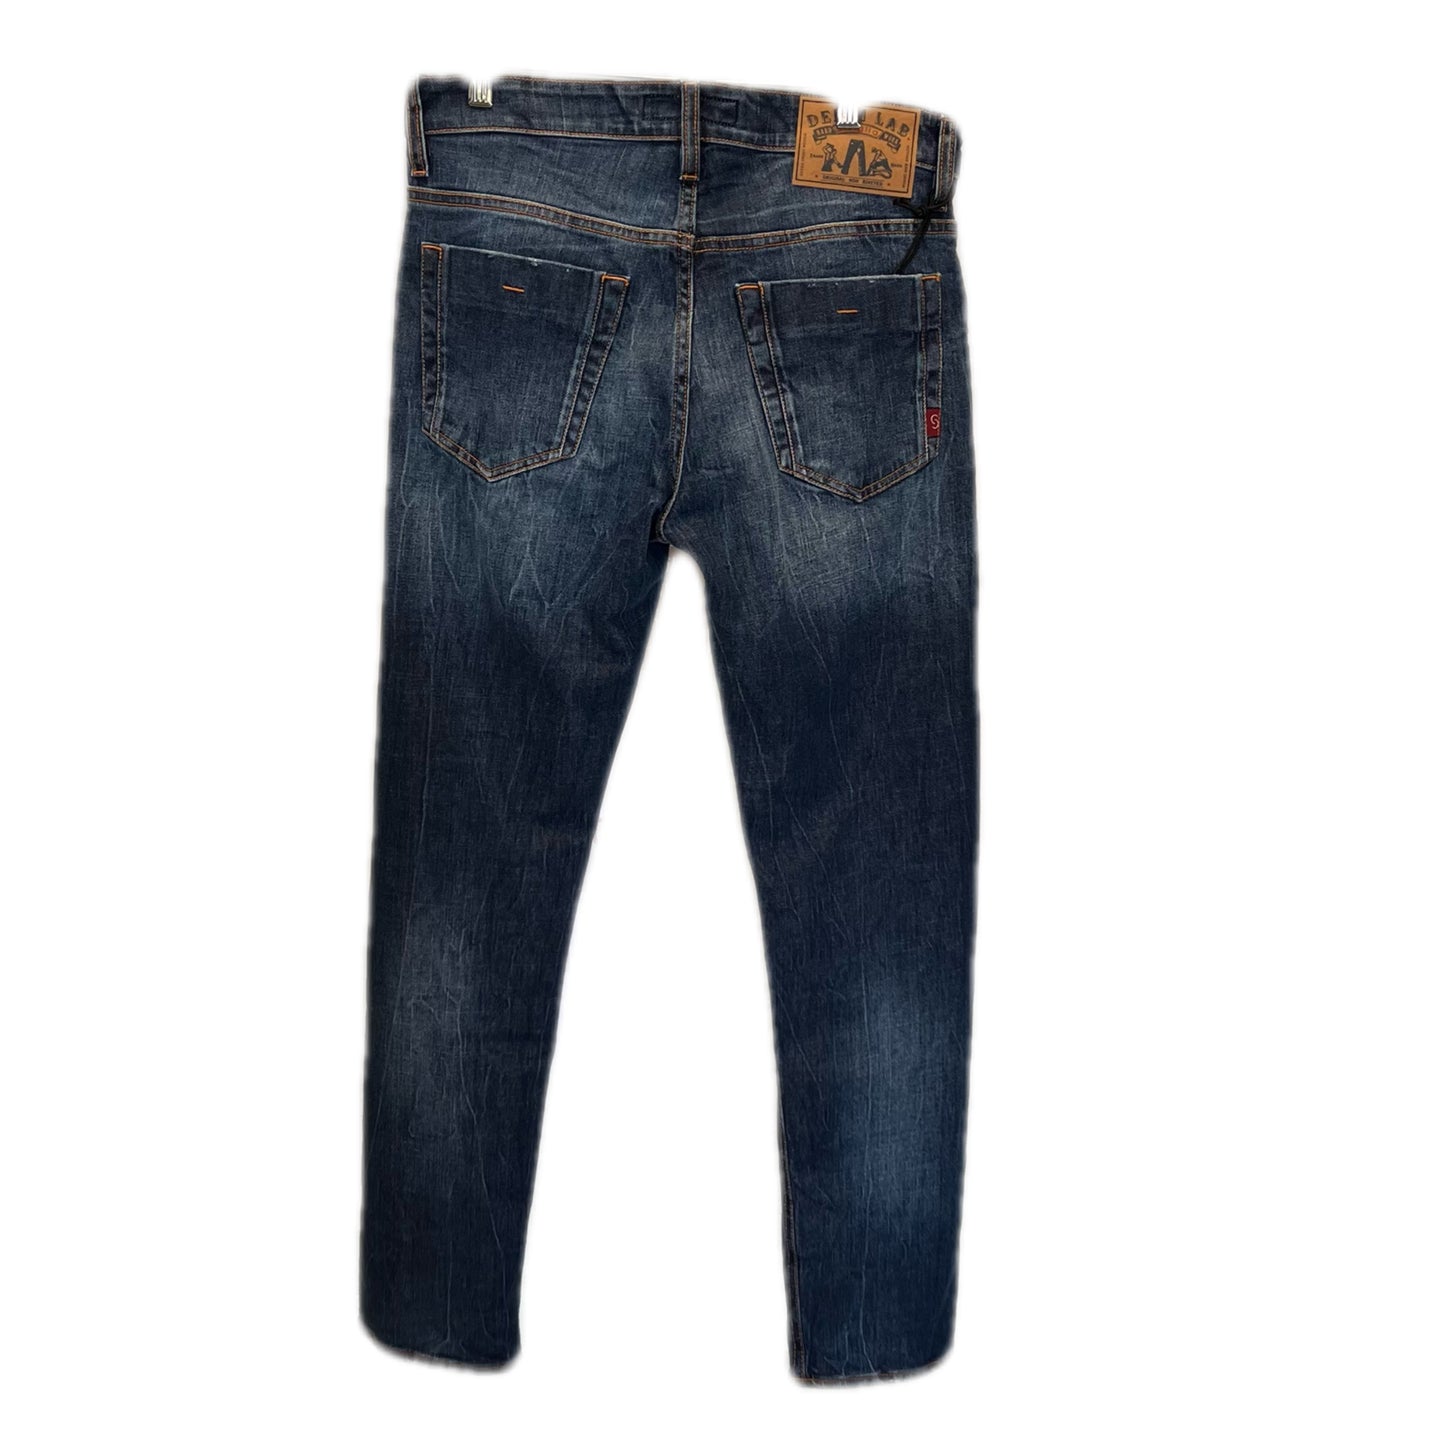 Siviglia - Jeans 5 Pockets Faded Fit Dark Navy